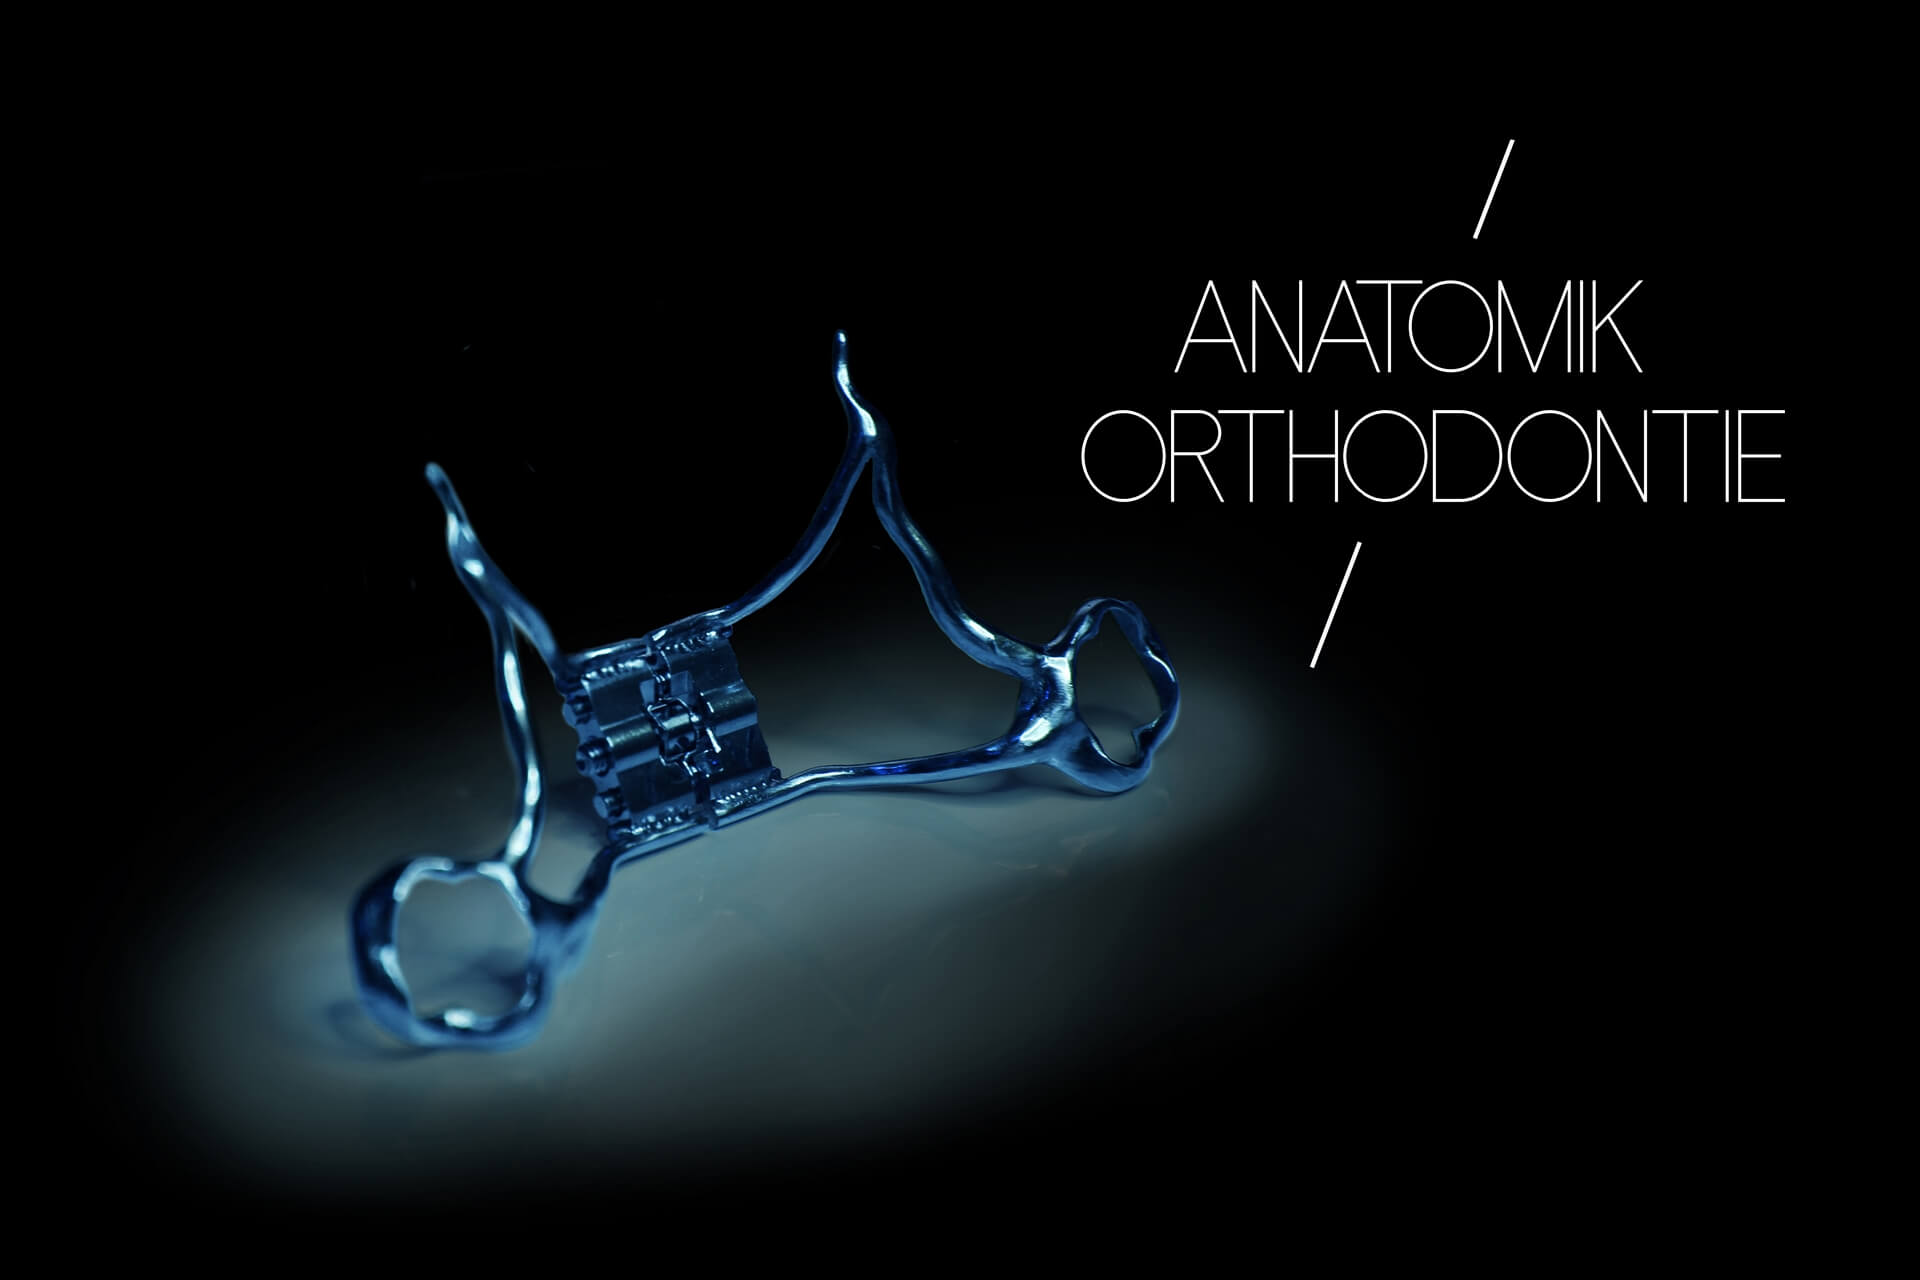 Disjoncteur Anatomik Anatomique Orthodontie